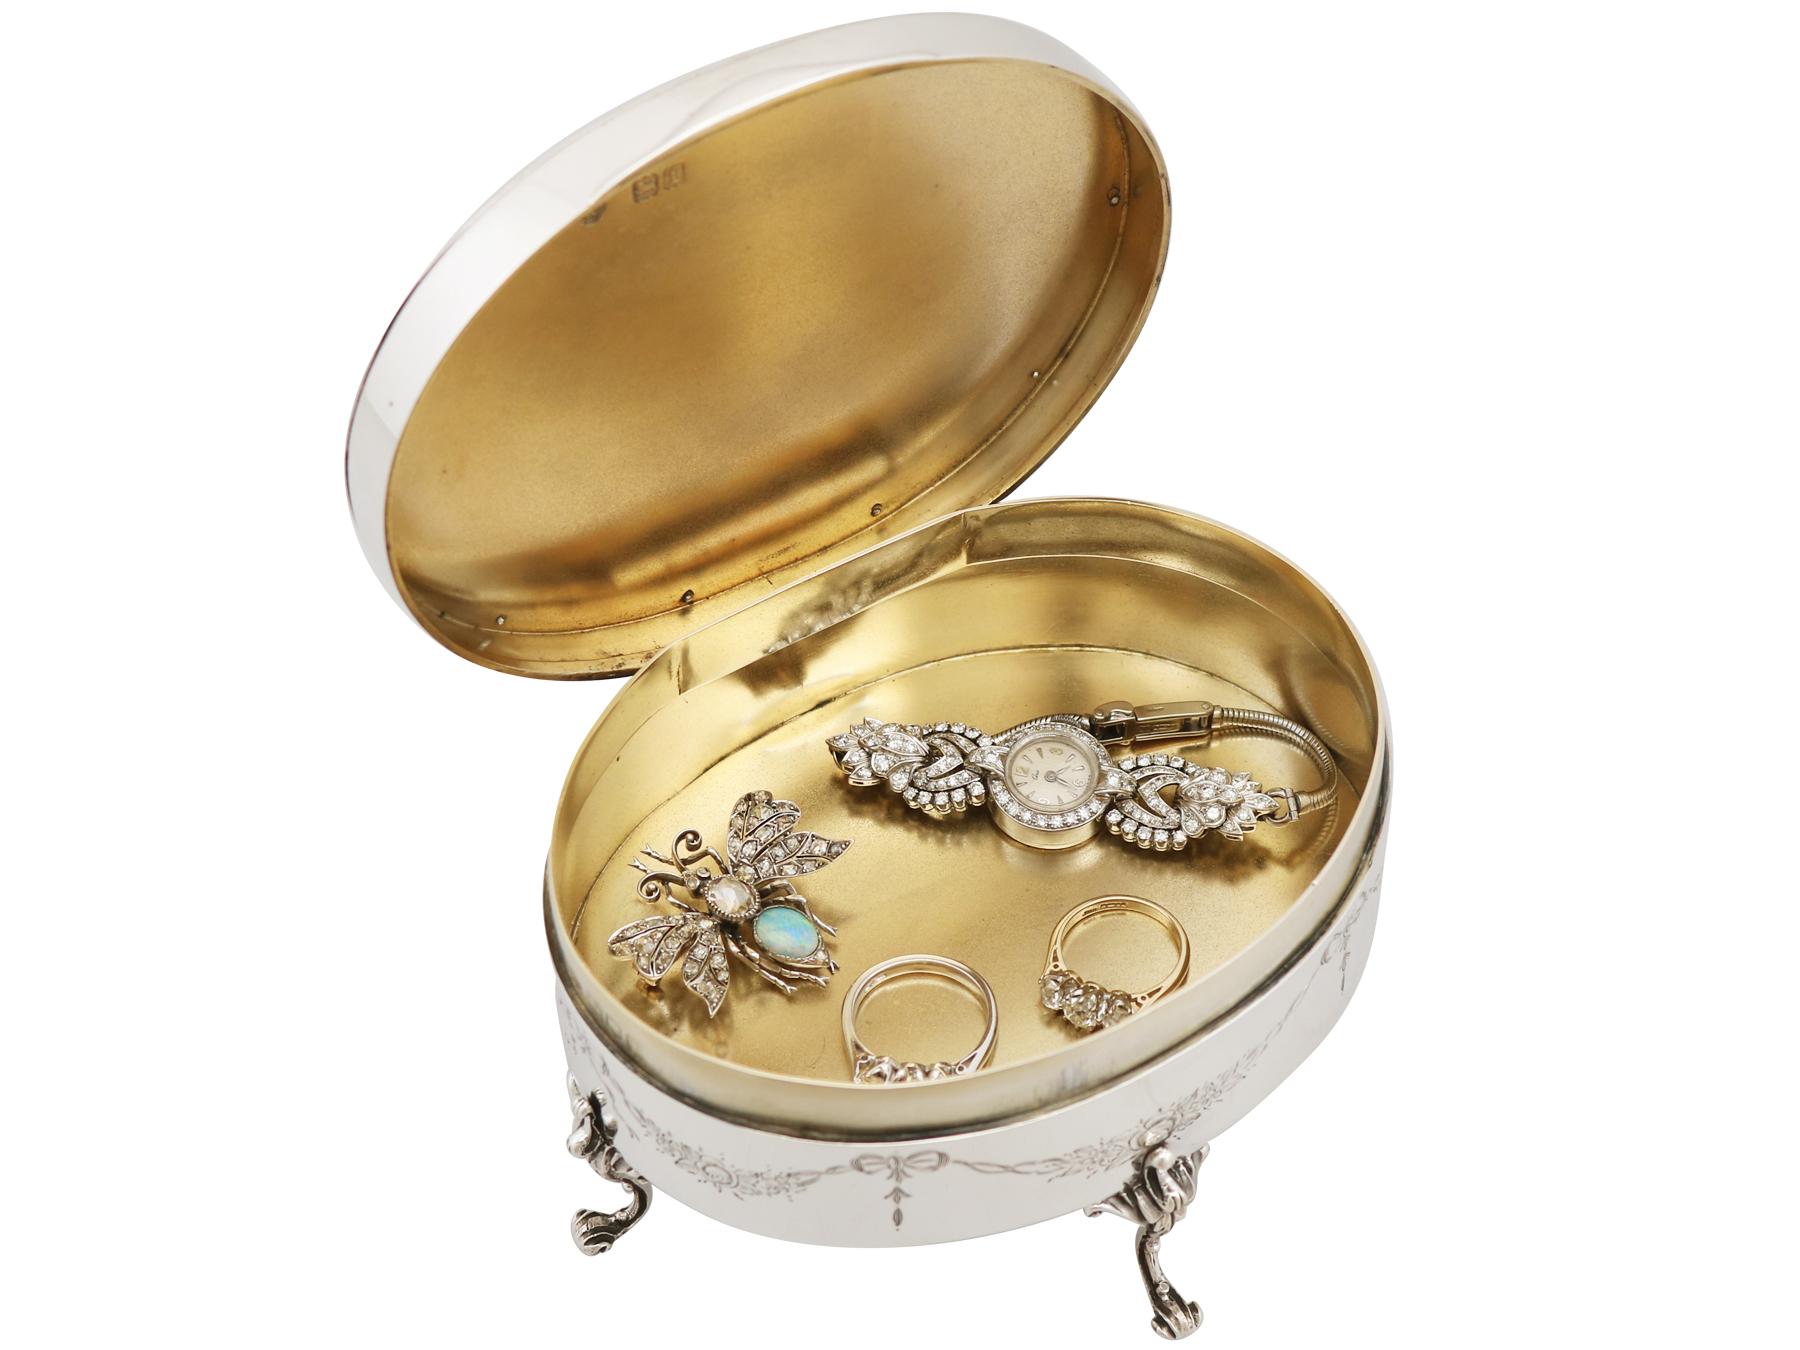 1906 Sterling Silver Jewelry or Trinket Box by Goldsmiths & Silversmiths Co Ltd 1